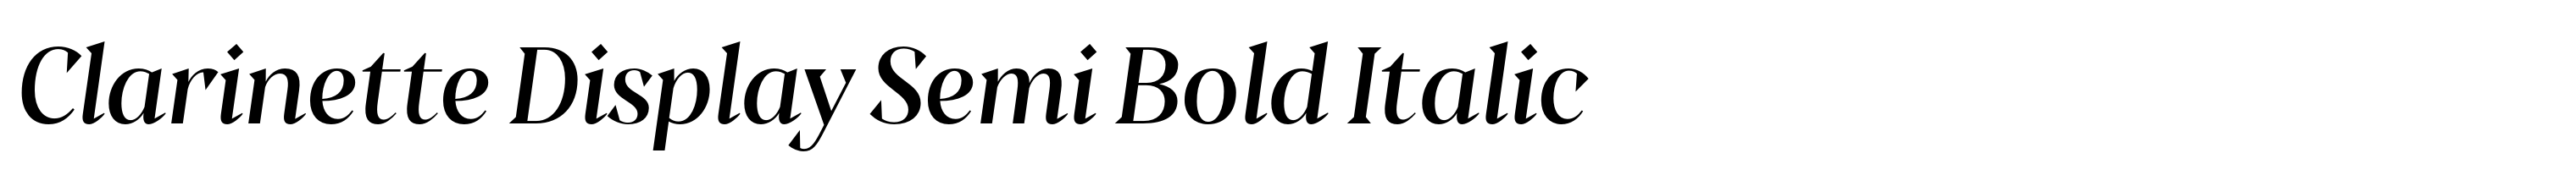 Clarinette Display Semi Bold Italic